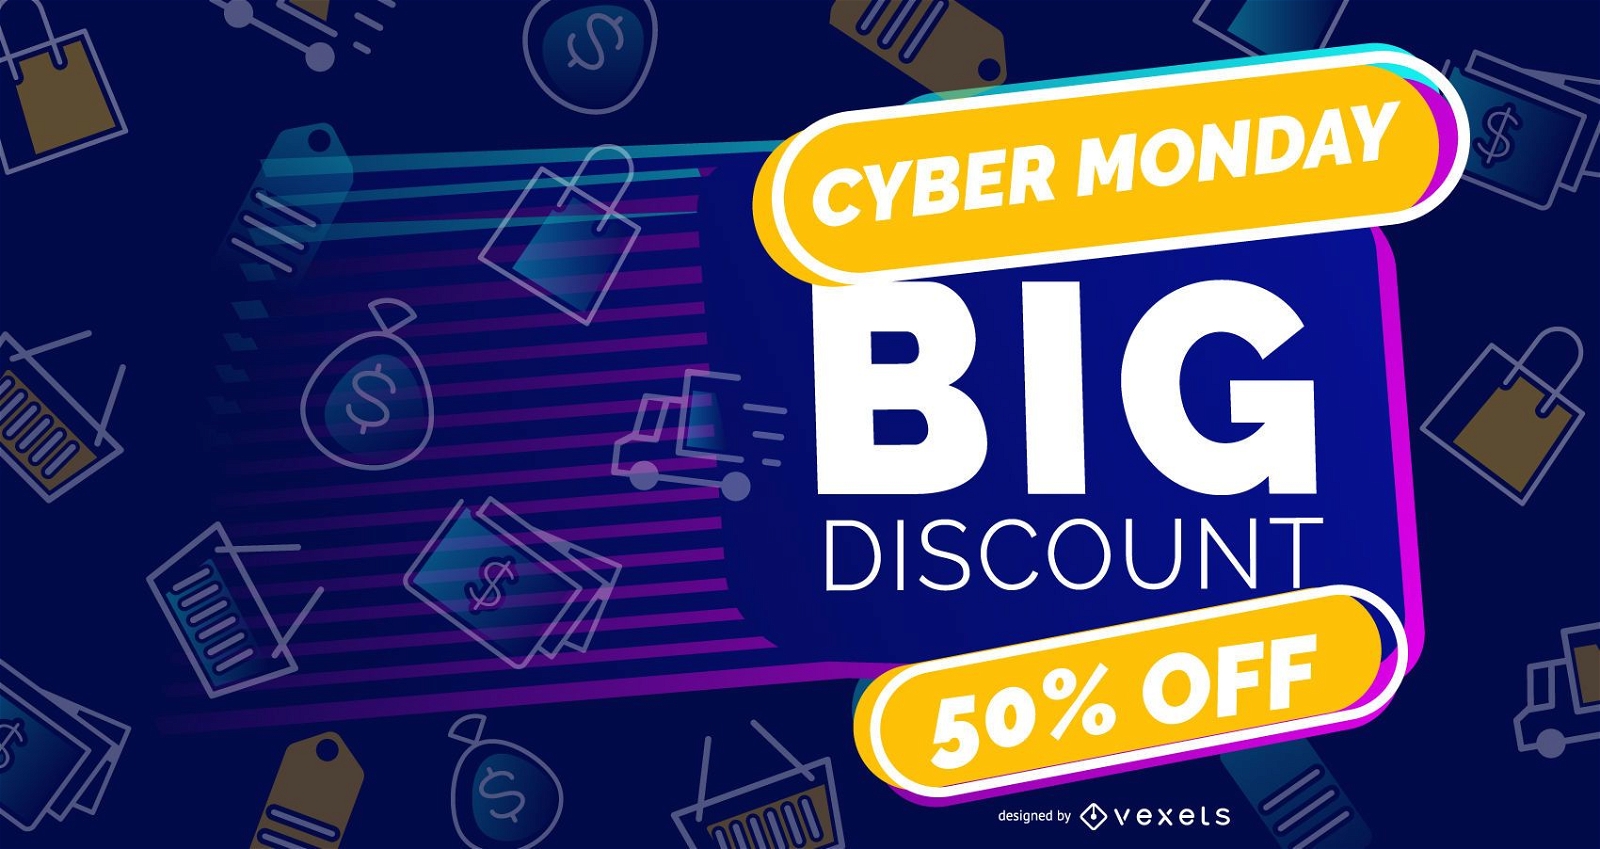 Big discount cyber monday slider